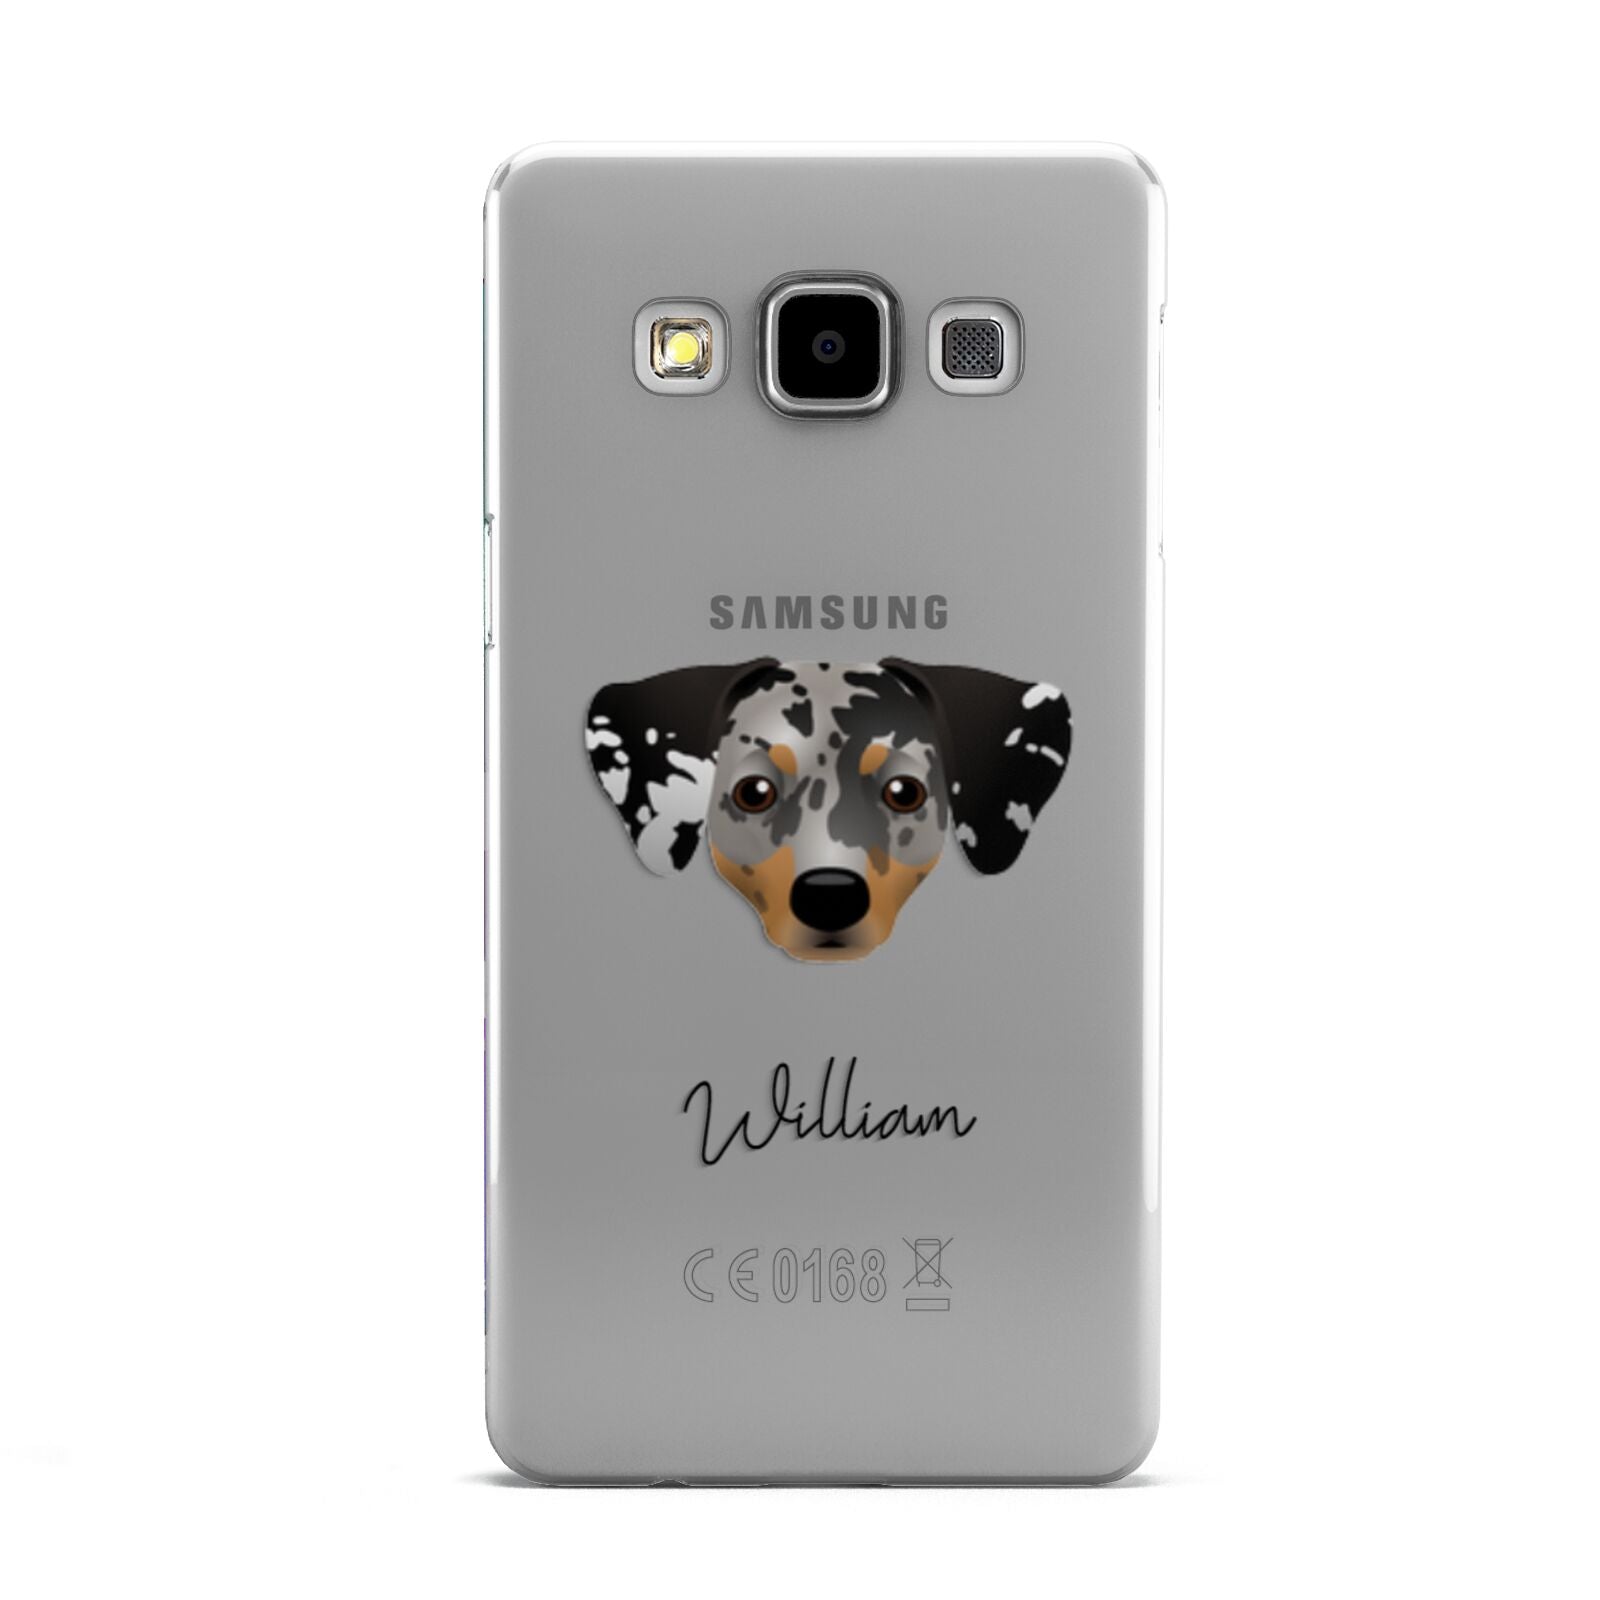 Chiweenie Personalised Samsung Galaxy A5 Case